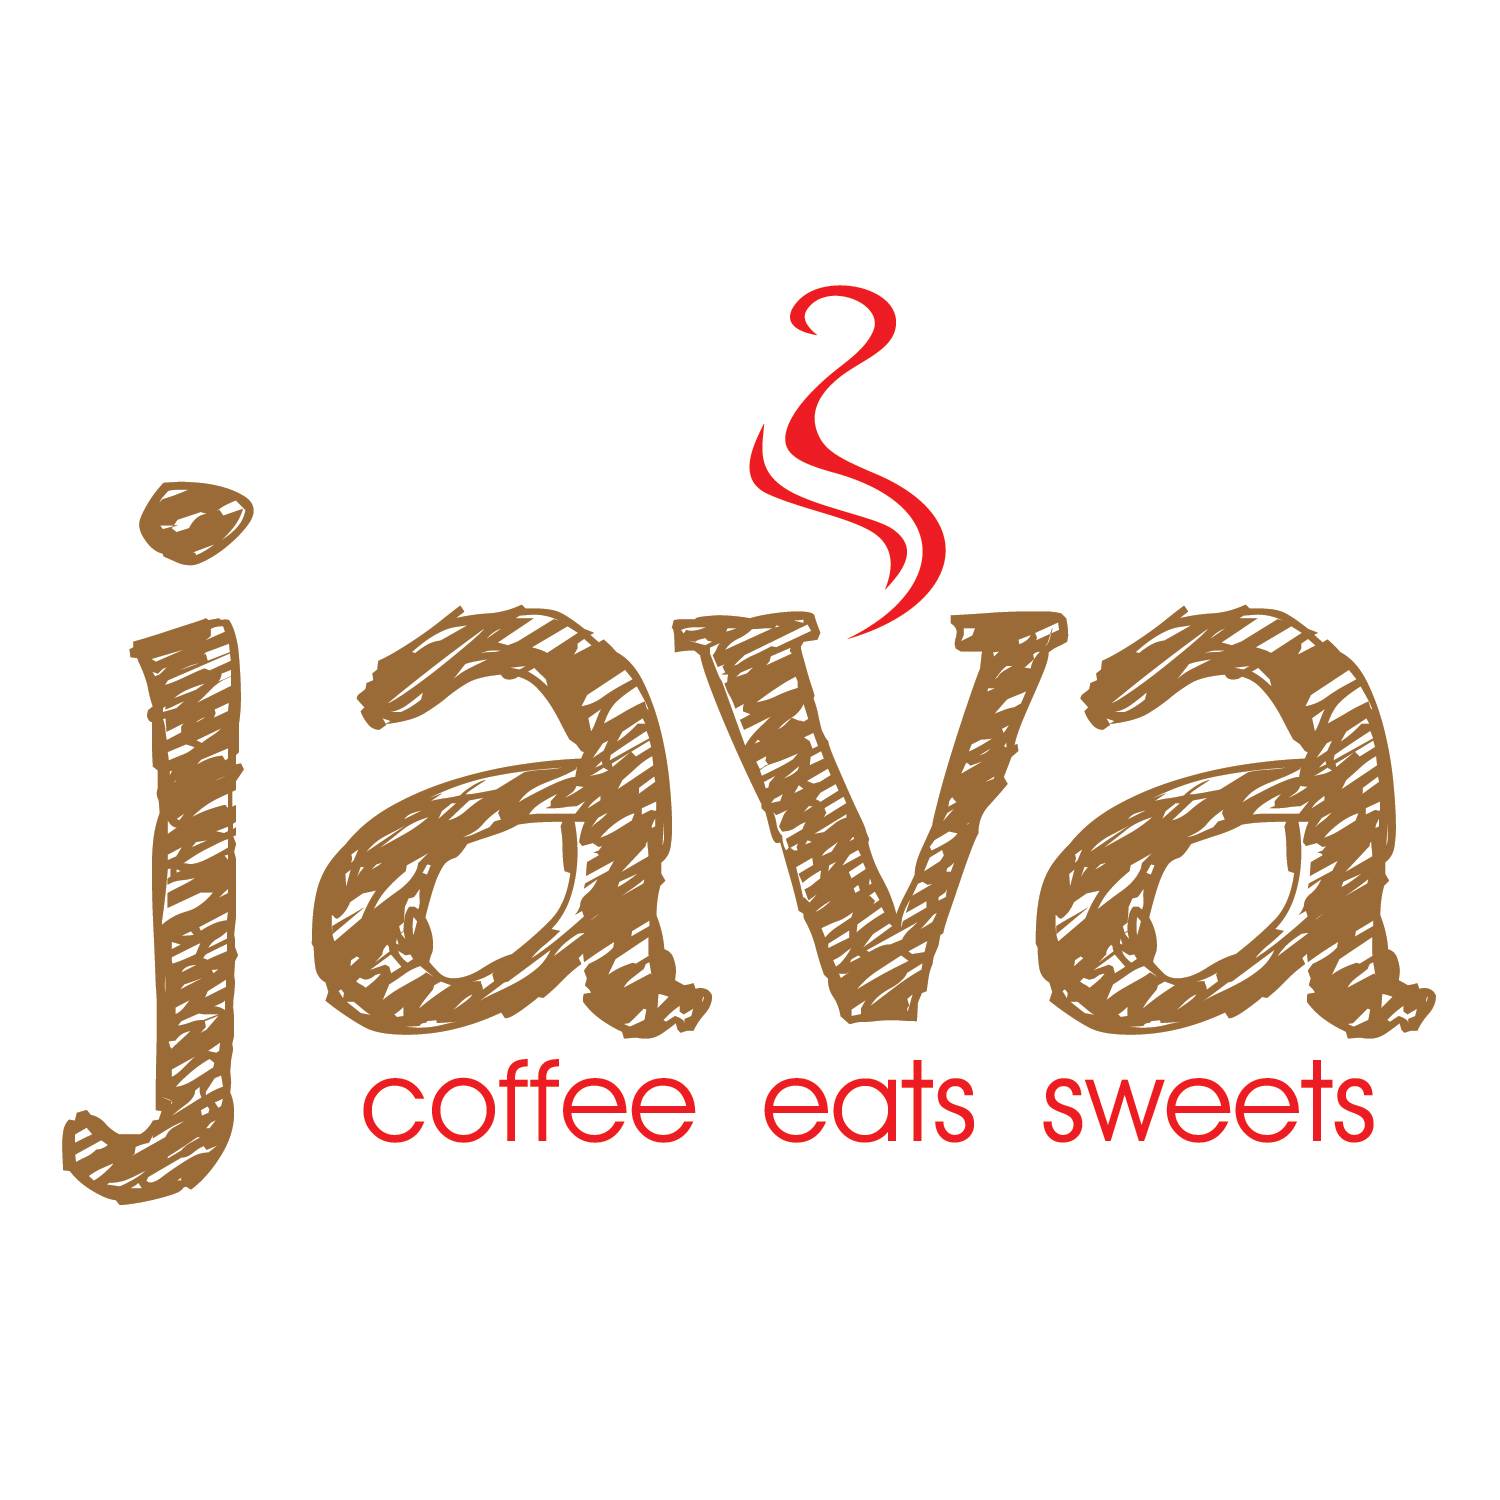 Java concept art